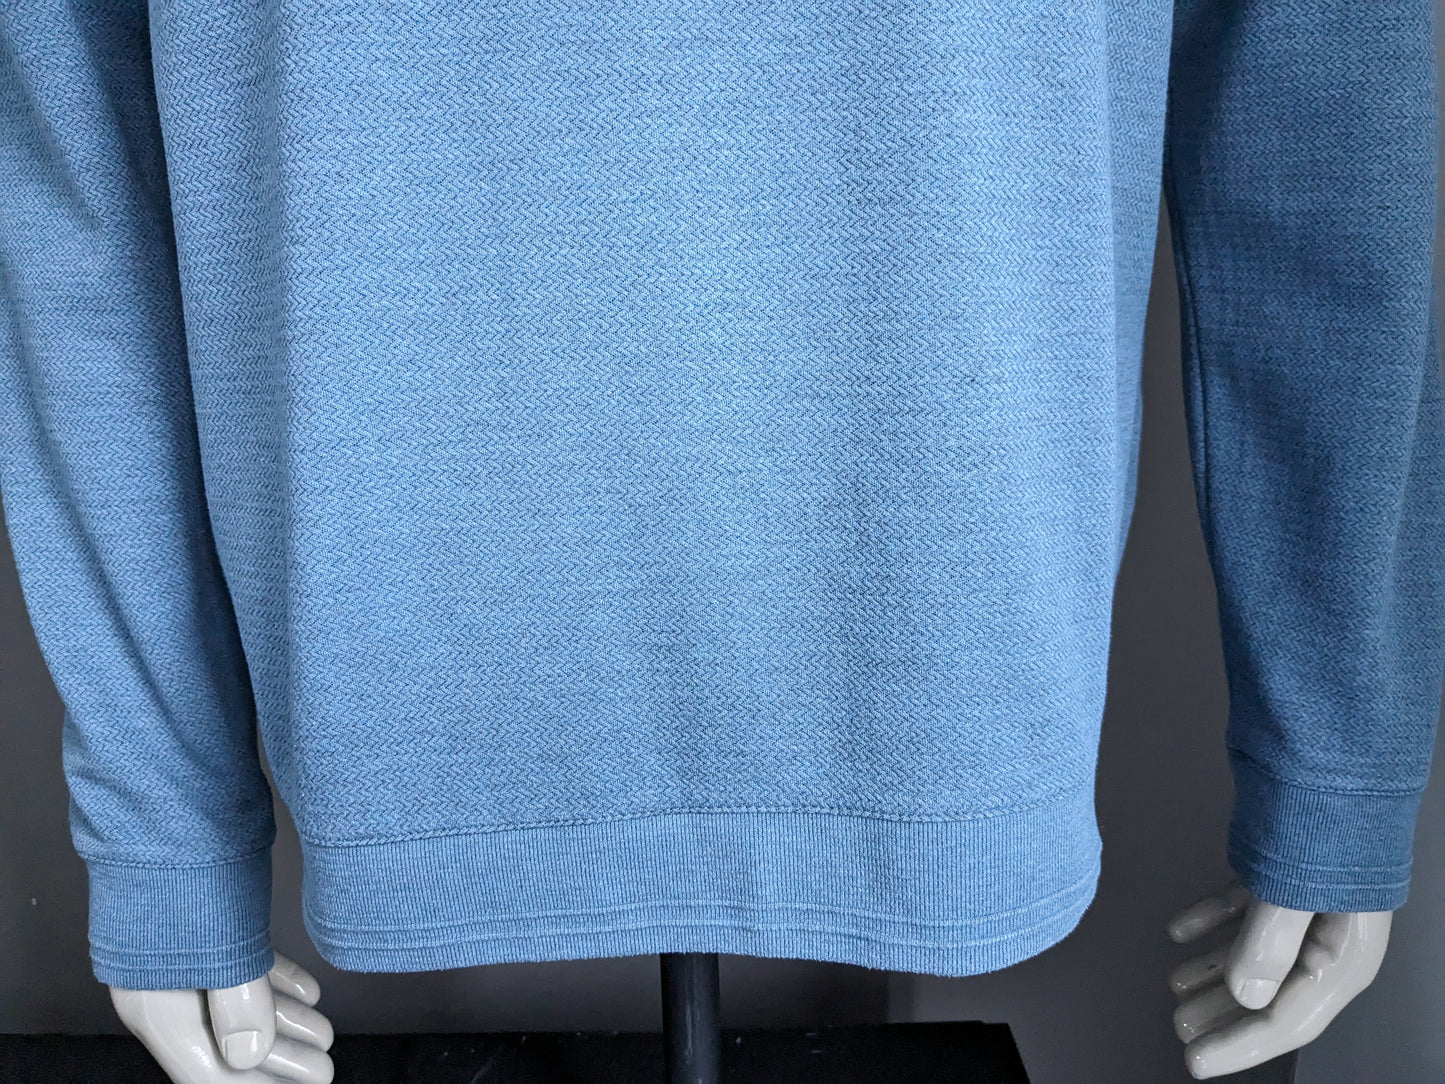 Ted Baker casual sweater. Blue herringbone motif. Size XL.